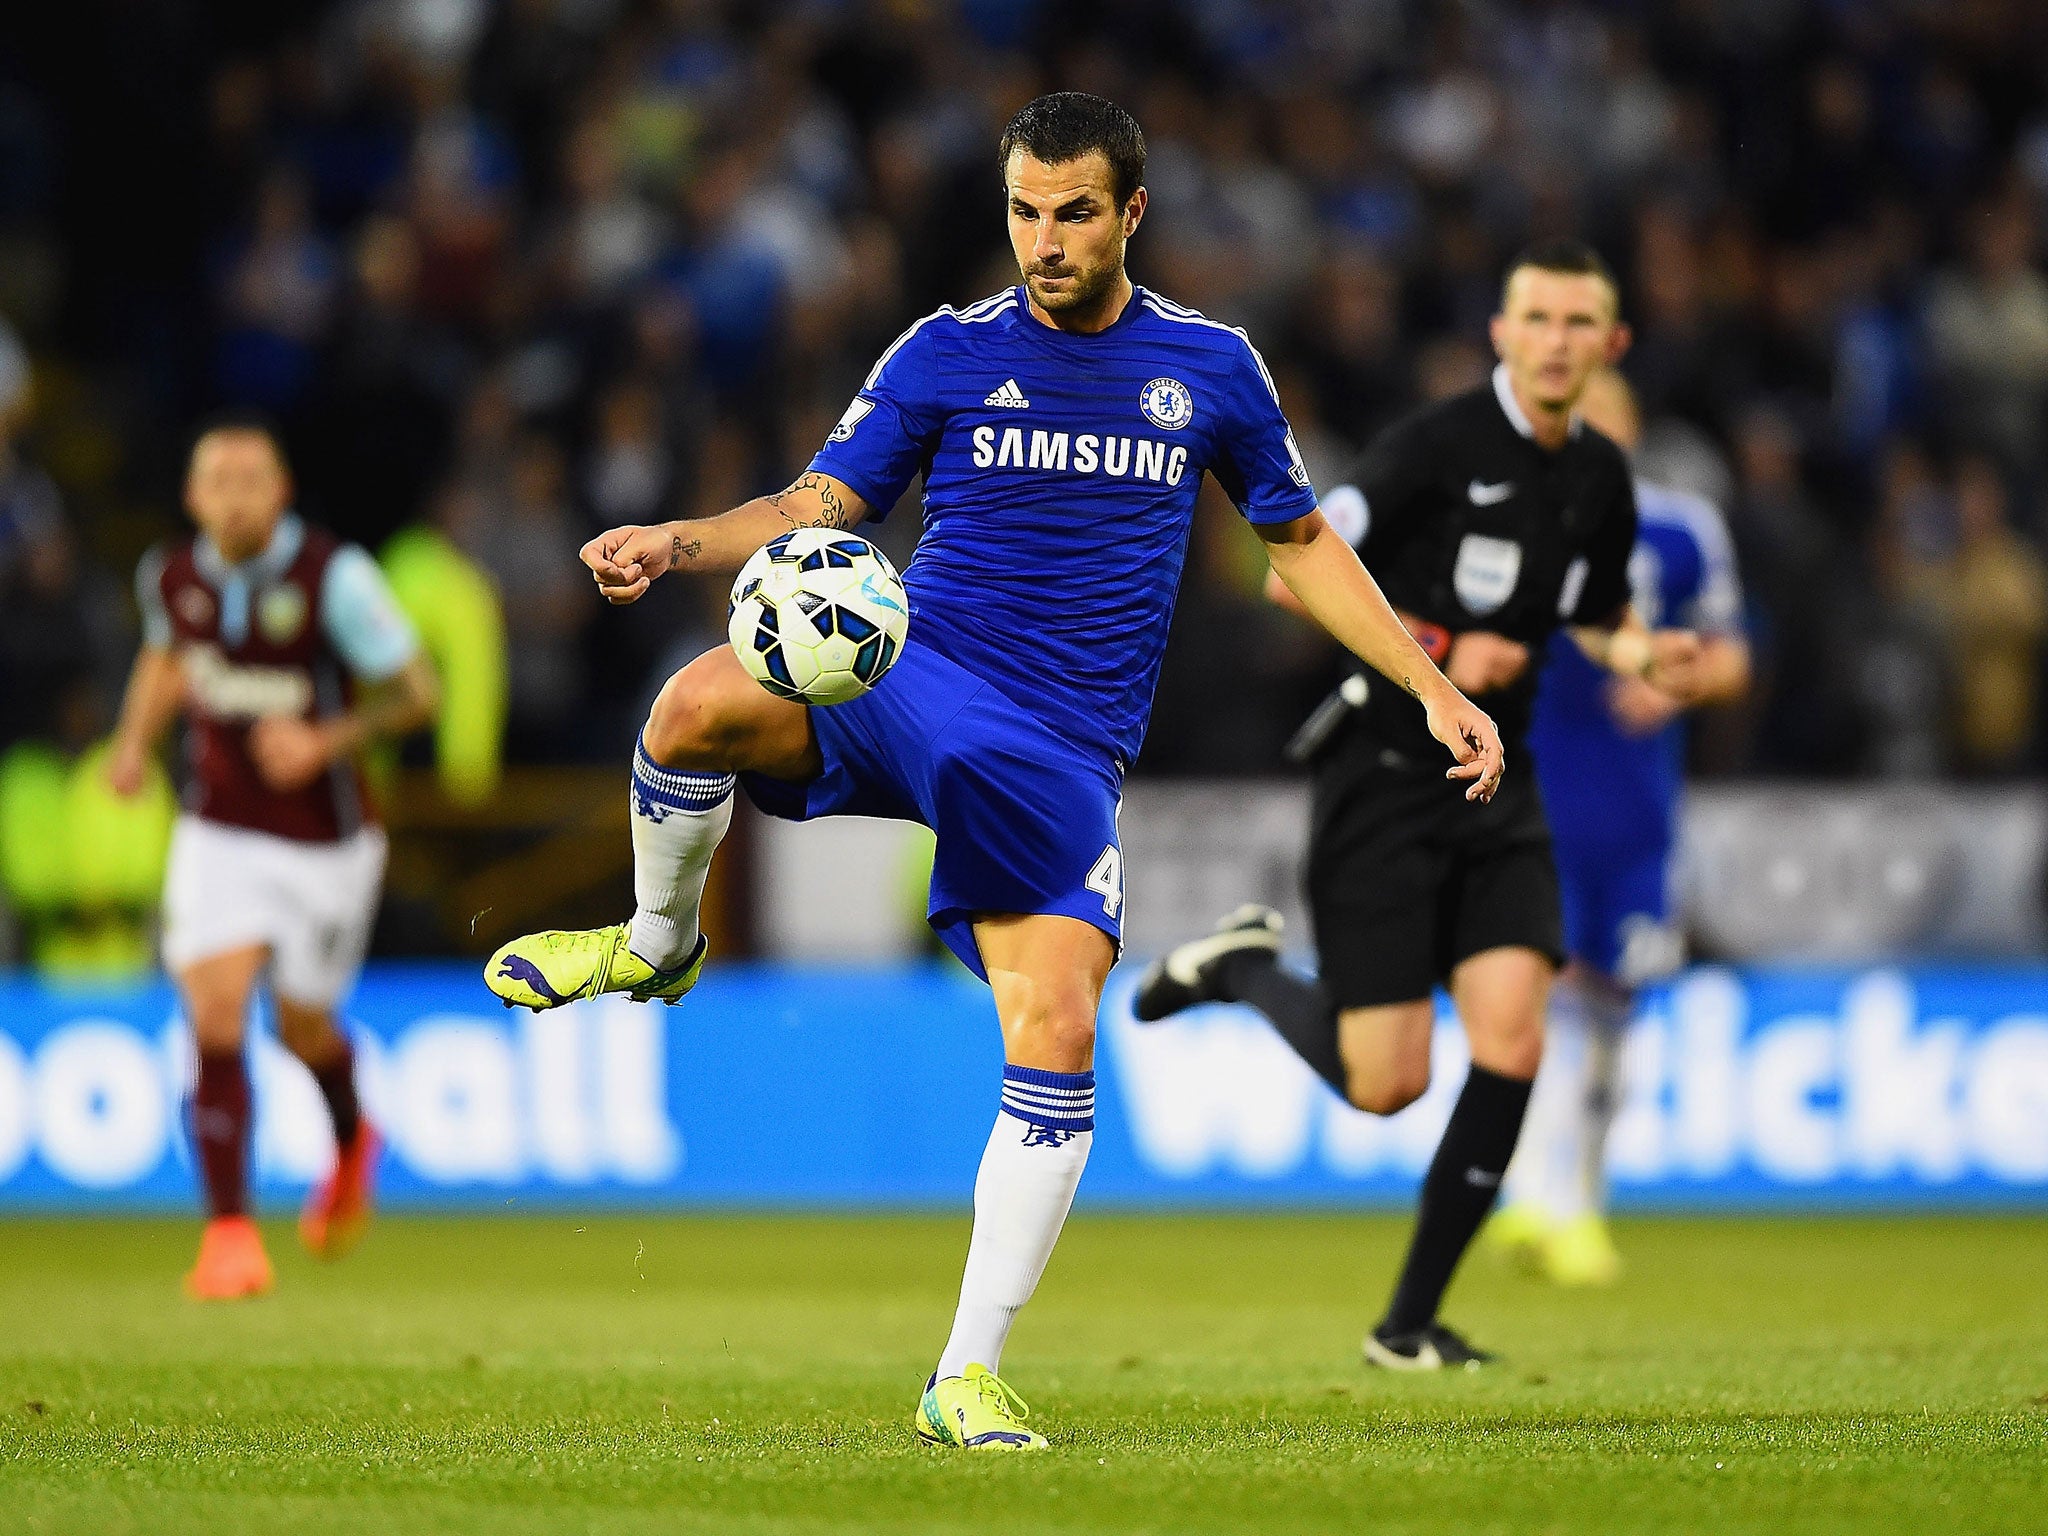 Cesc Fabregas impressed on his Chelsea debut